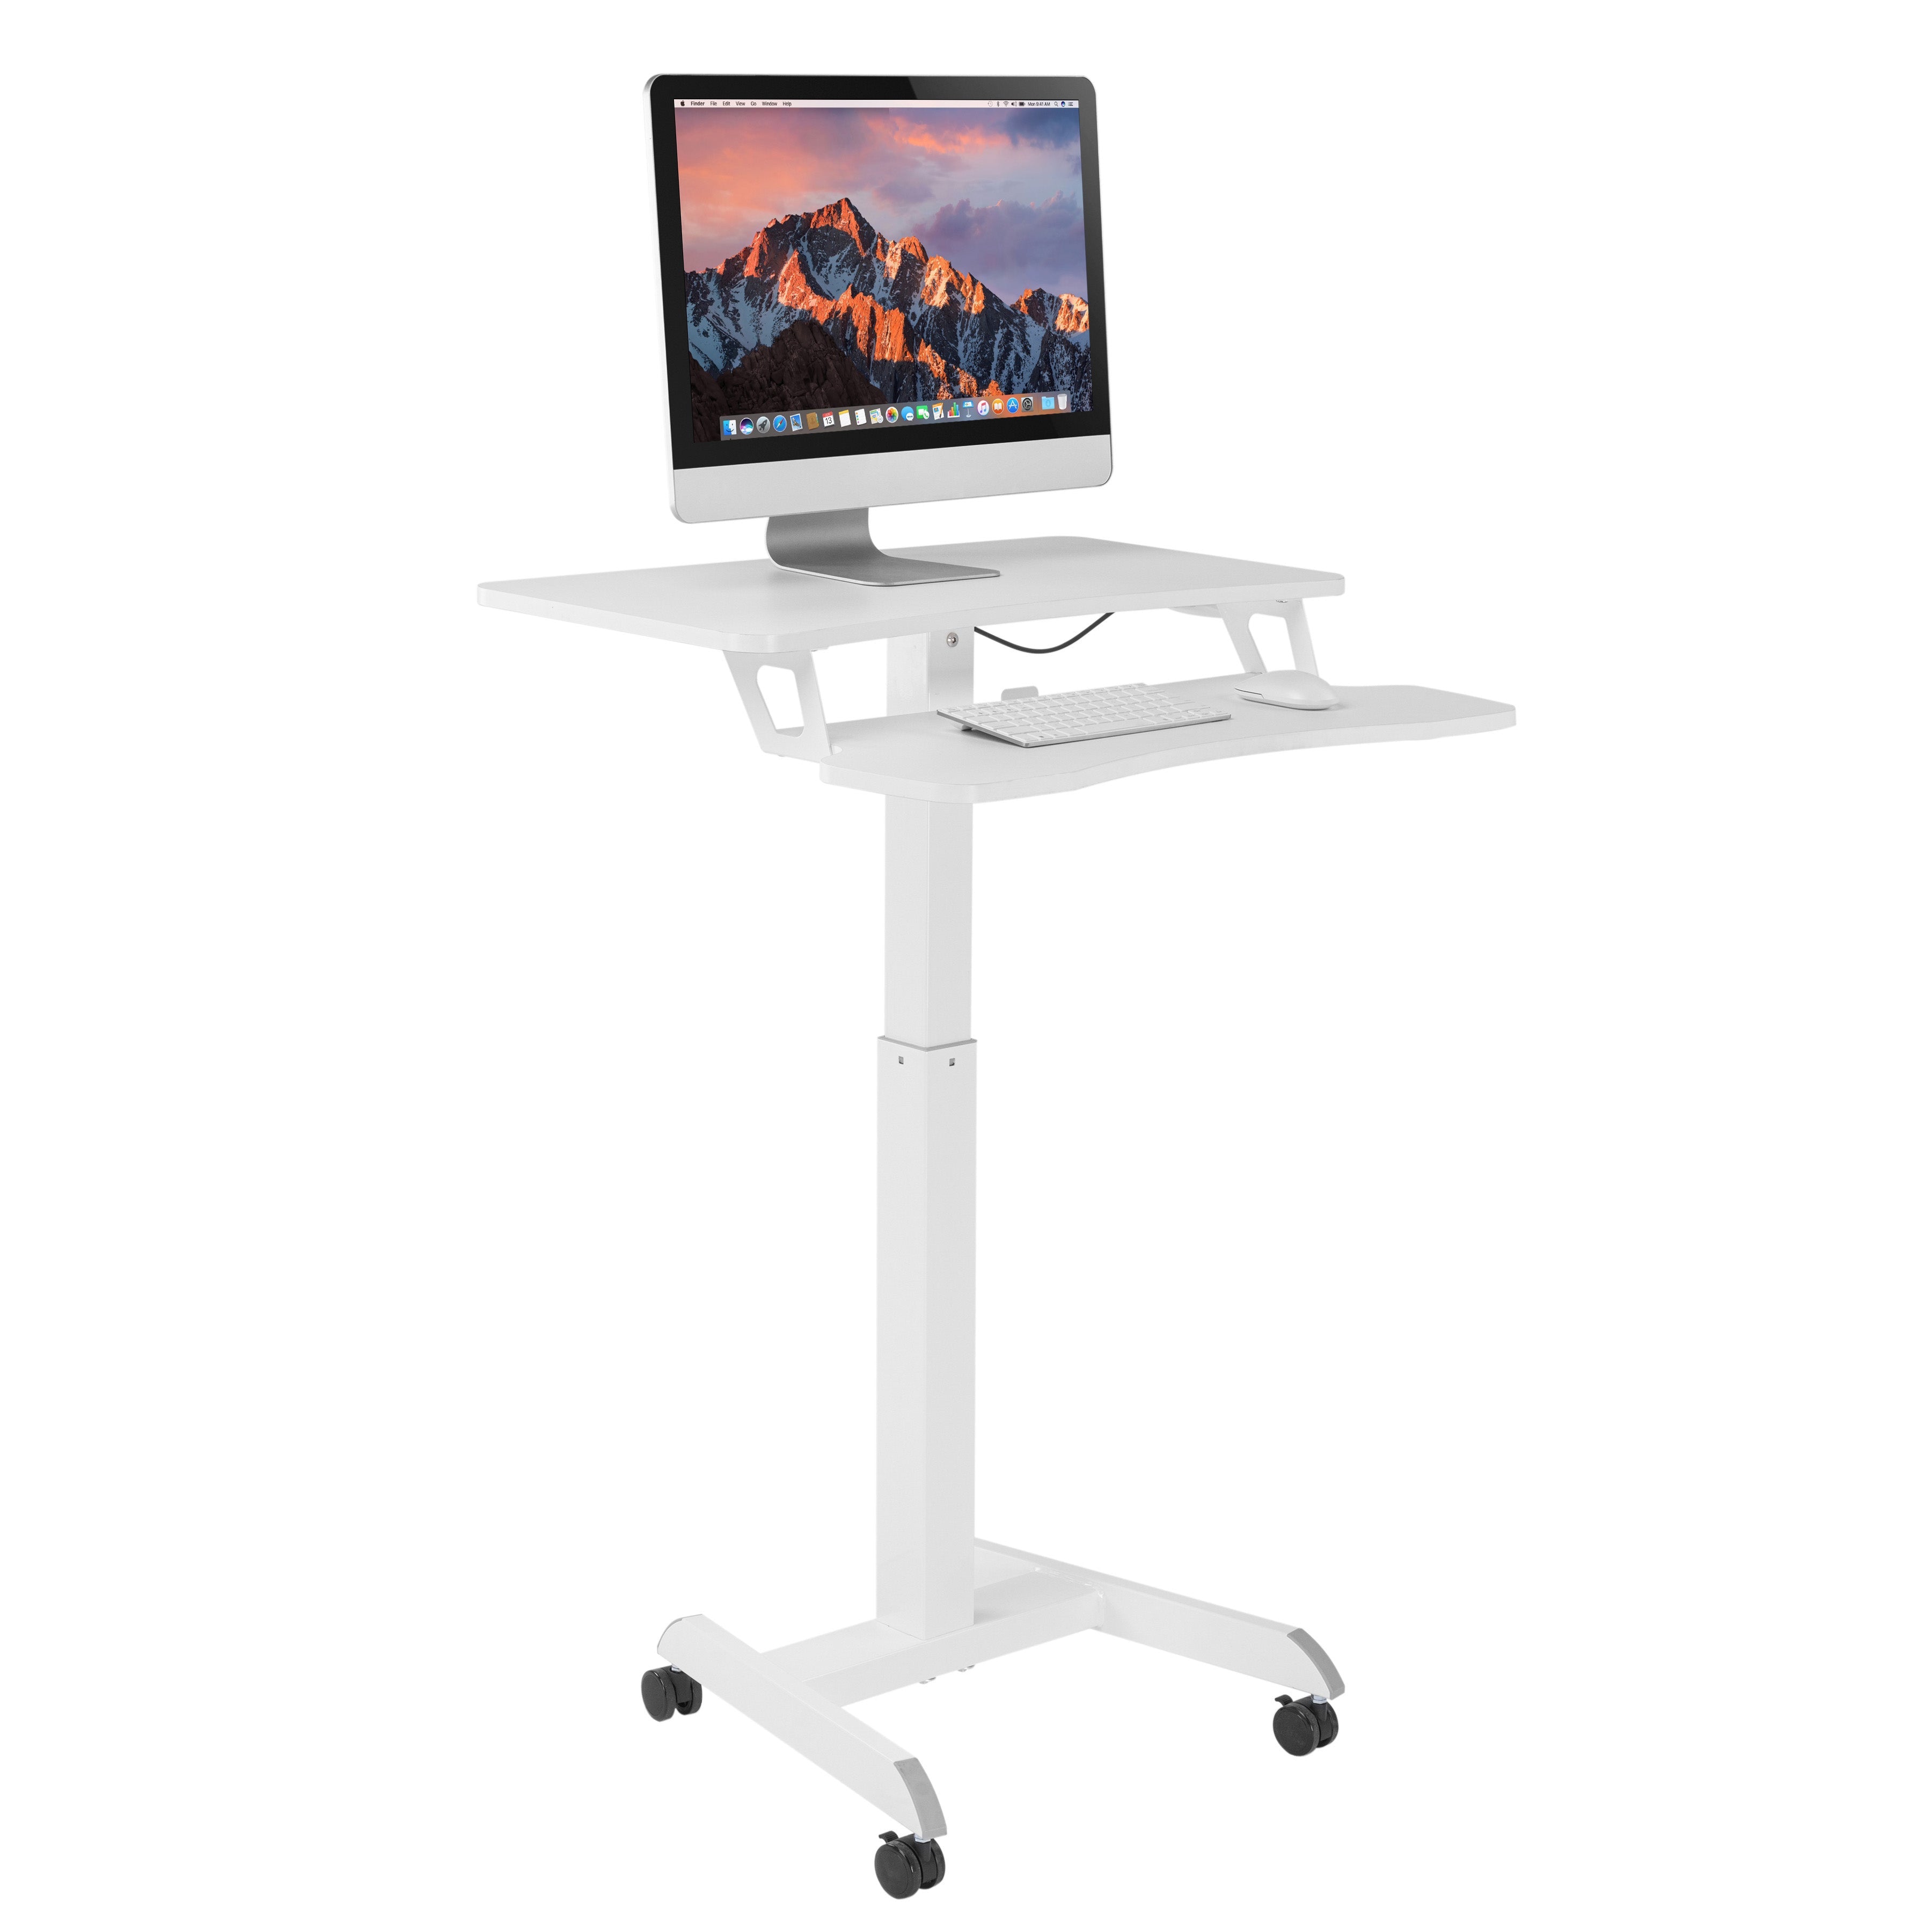 ProperAV Two Tier Mobile Workstation Desk with Pneumatic Height Adjustment